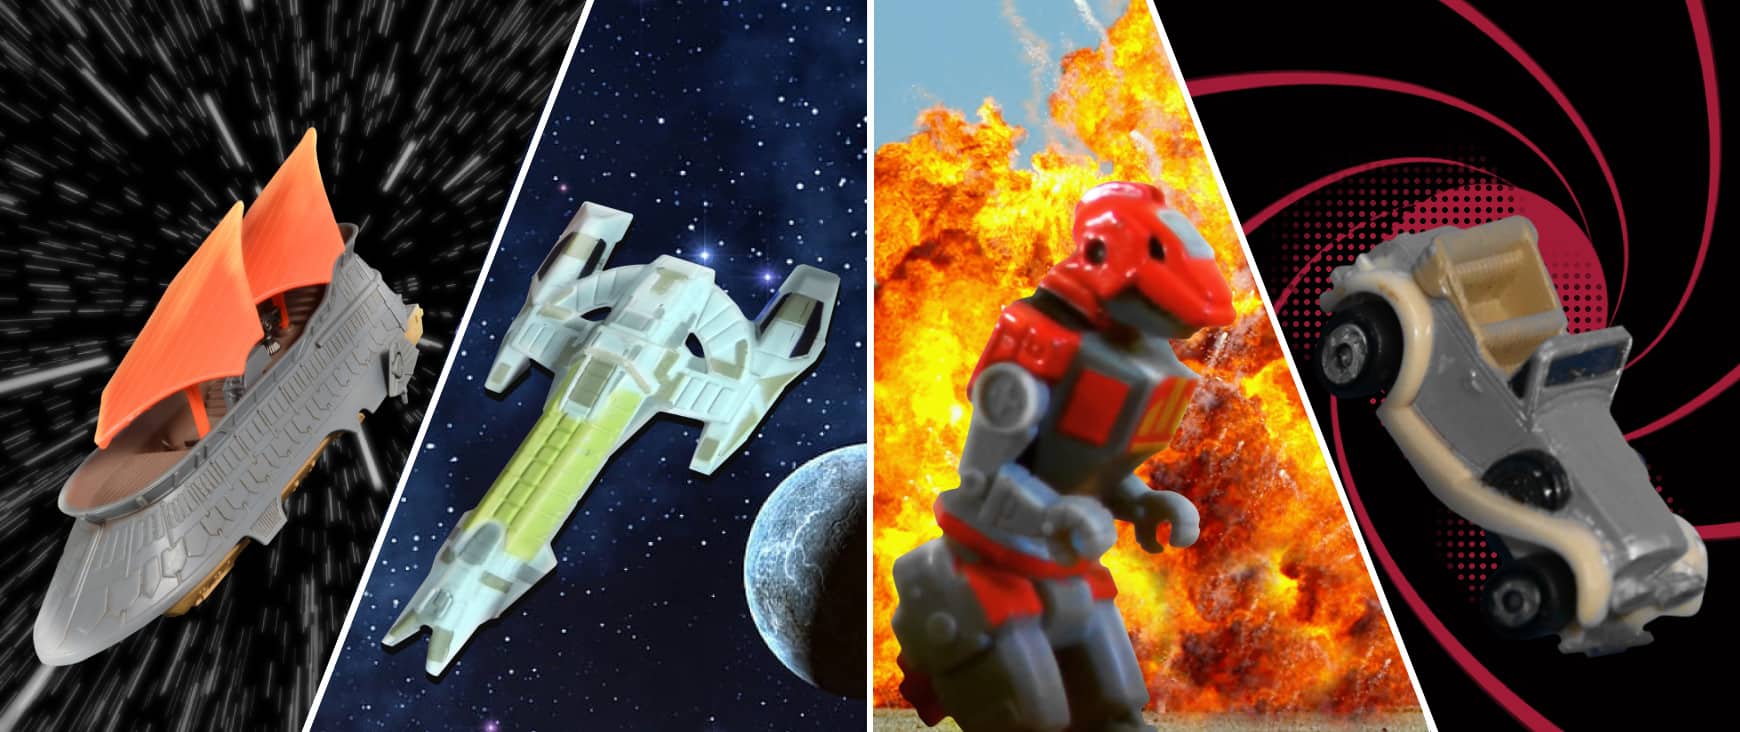 Stars Wars, Star Trek, Power Rangers and James Bond licensed Micro Machines sets